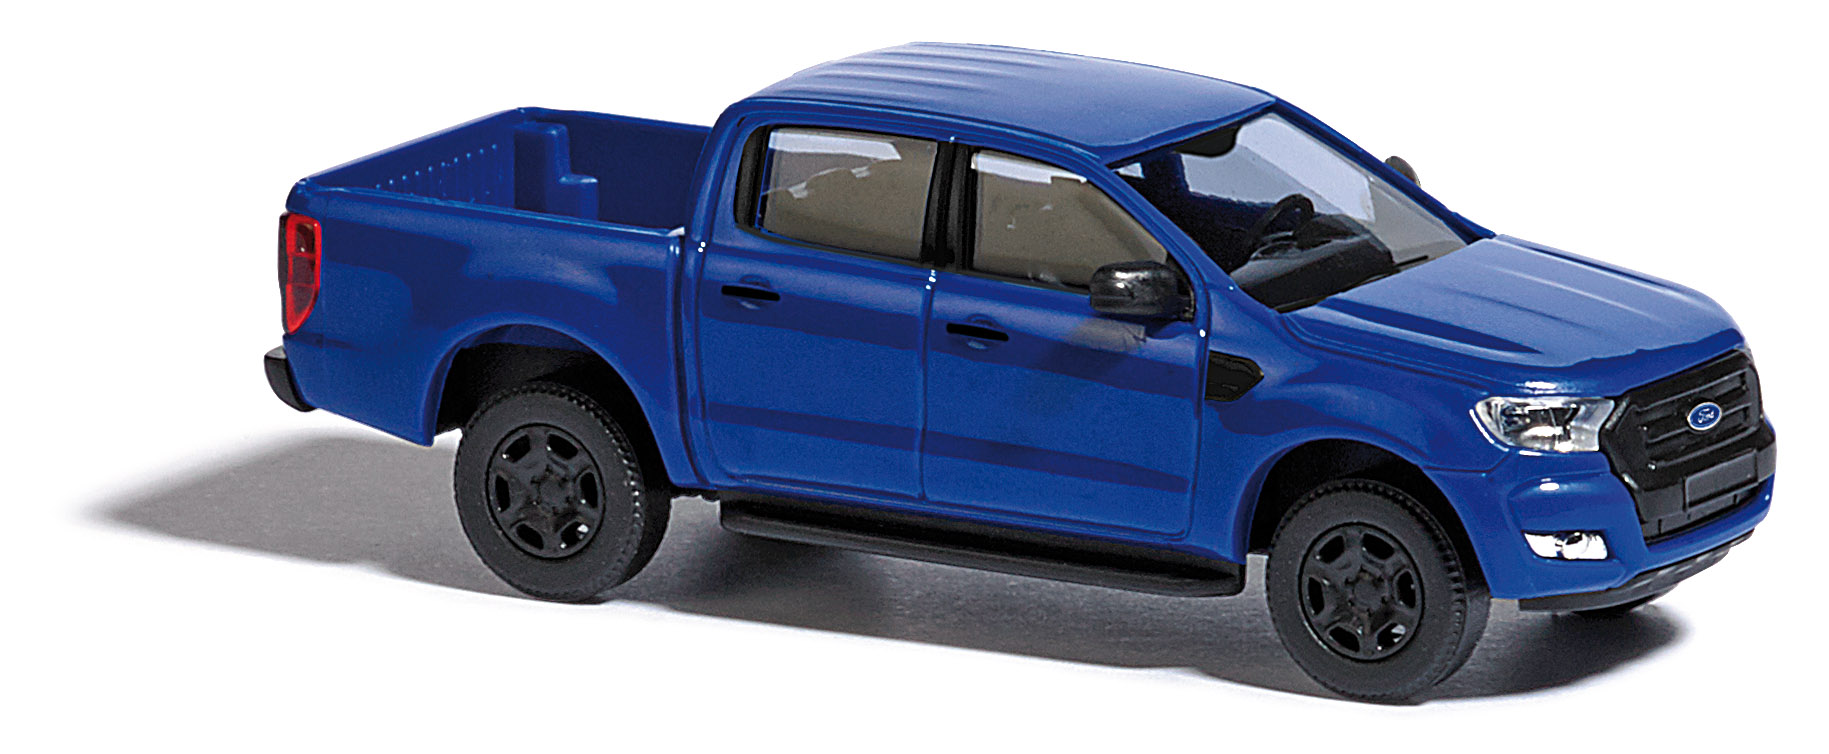 52803-Ford Ranger, Blau-4001738528039